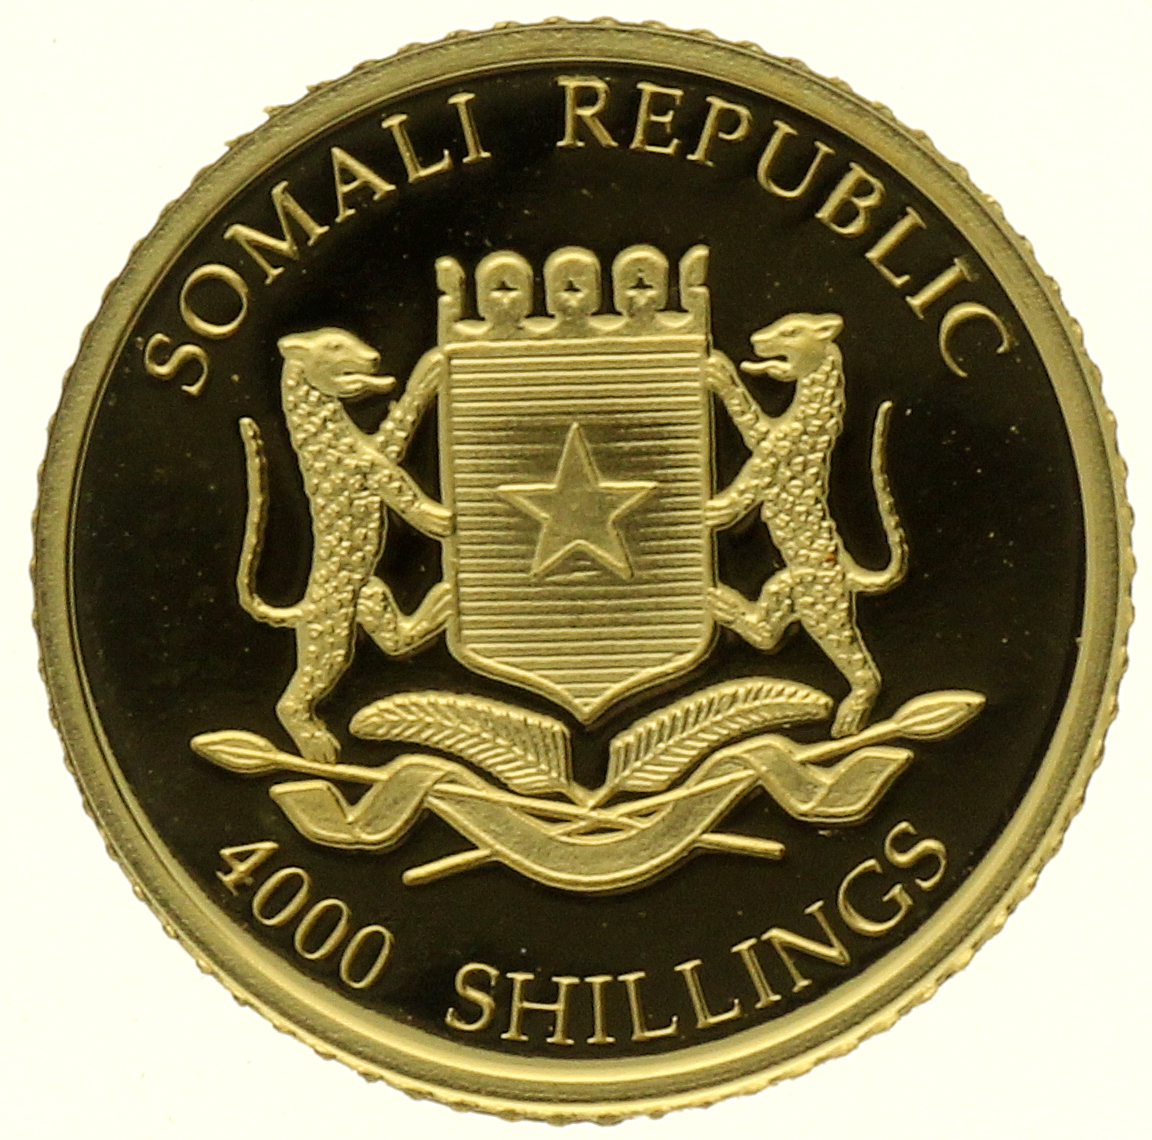 Somalia - 4000 shillings - 2006 - Three wise monkeys - 1/25oz